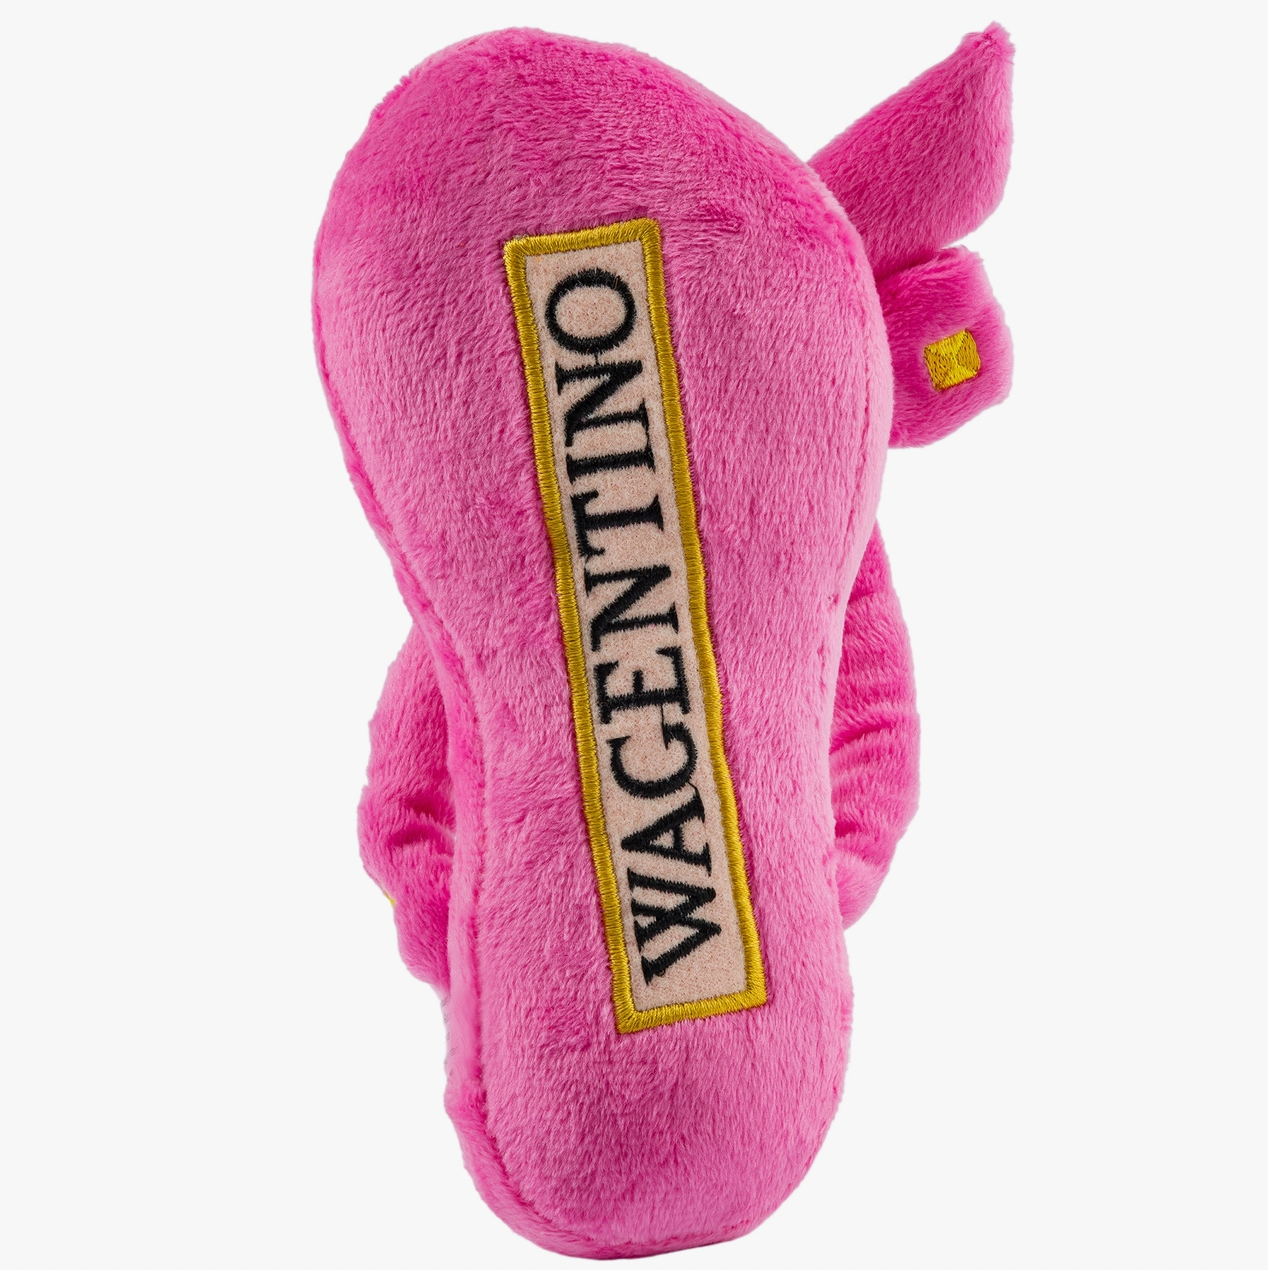 Wagentino Sandal Dog Toy